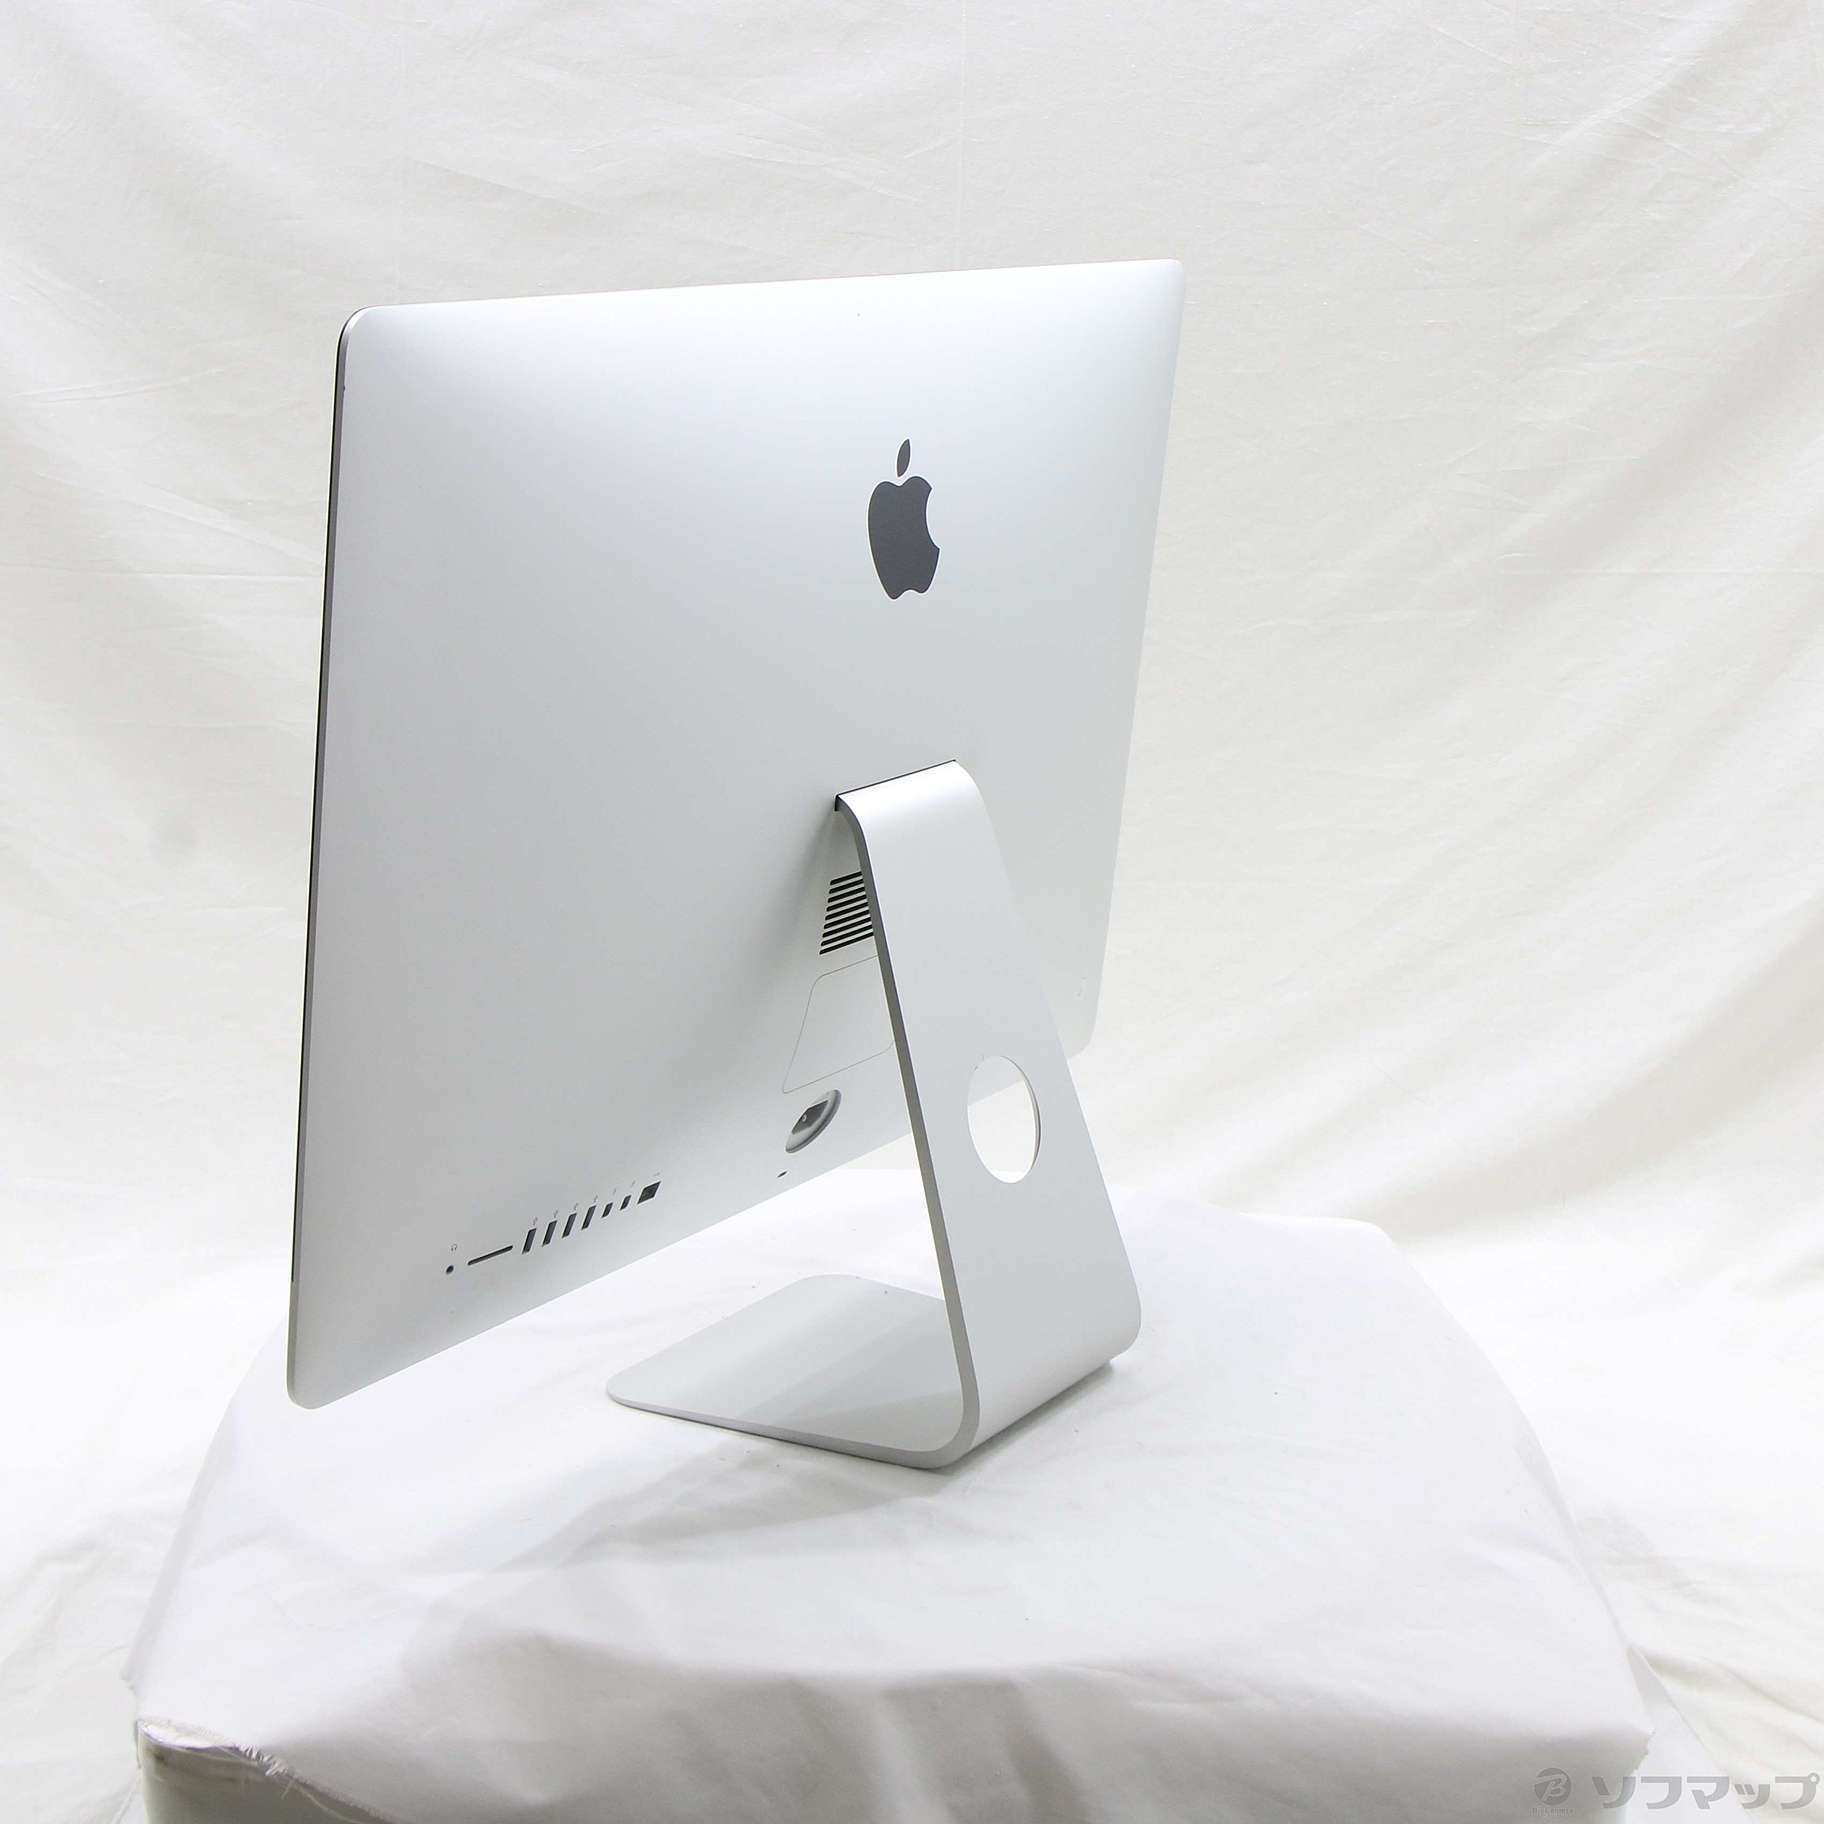 中古】iMac 27-inch Late 2012 MD096J／A Core_i7 3.4GHz 32GB